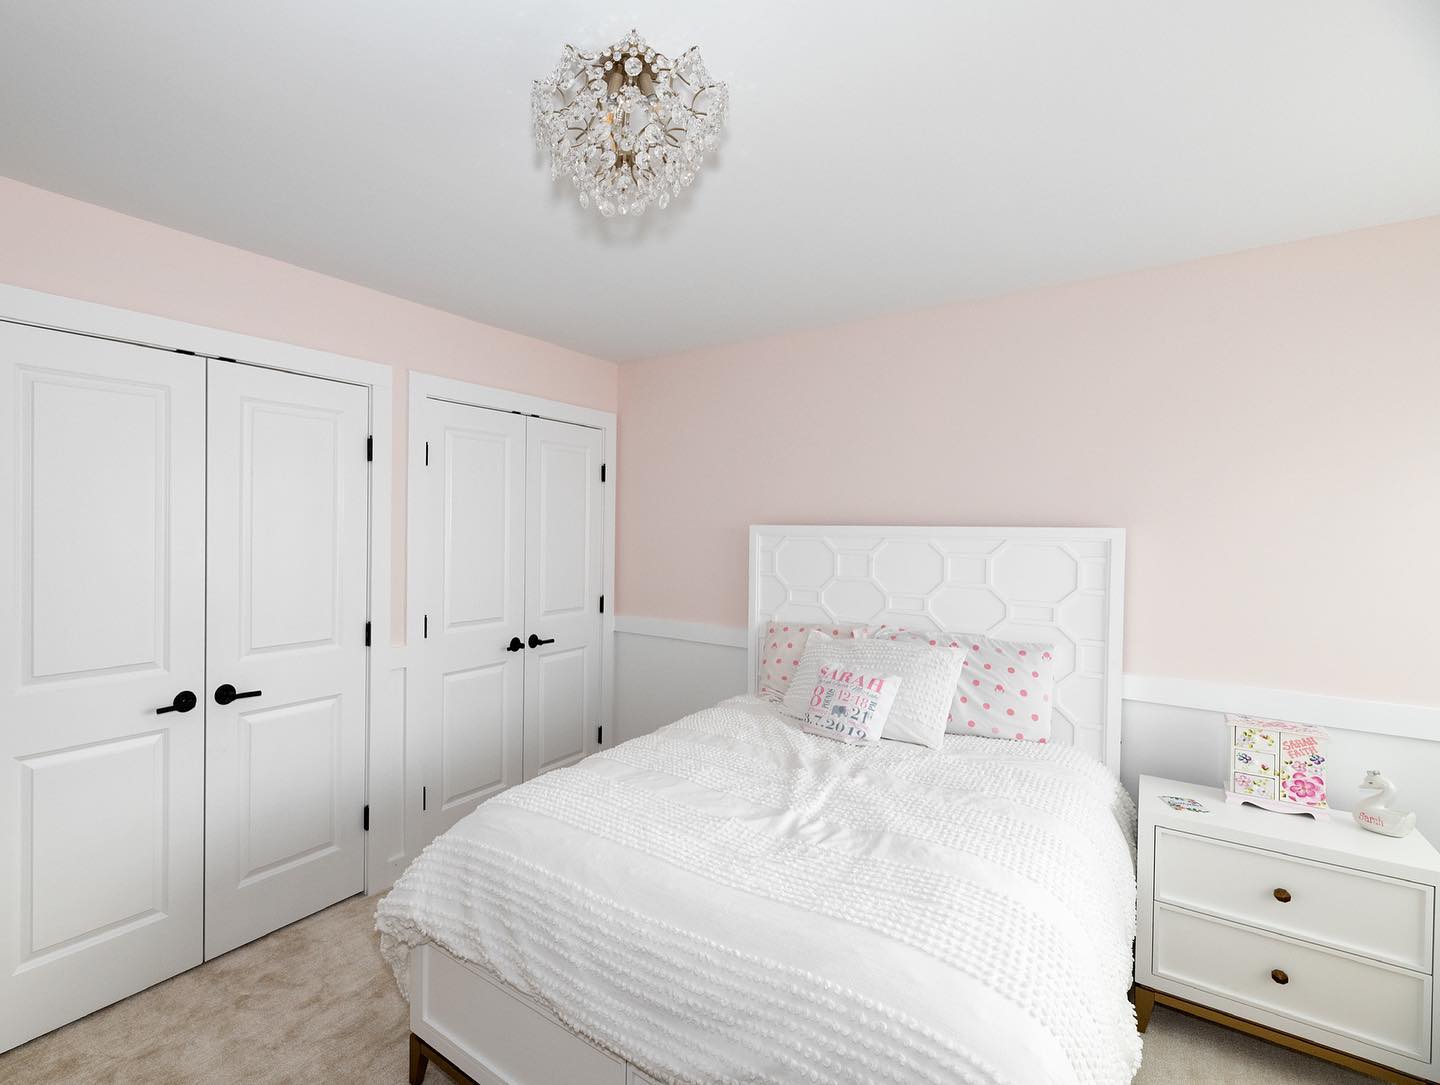 https://www.interiorsbycolor.com/wp-content/uploads/2022/06/pink-and-white-bedroom-design-Benjamin-Moore-Pink-Bliss.jpg